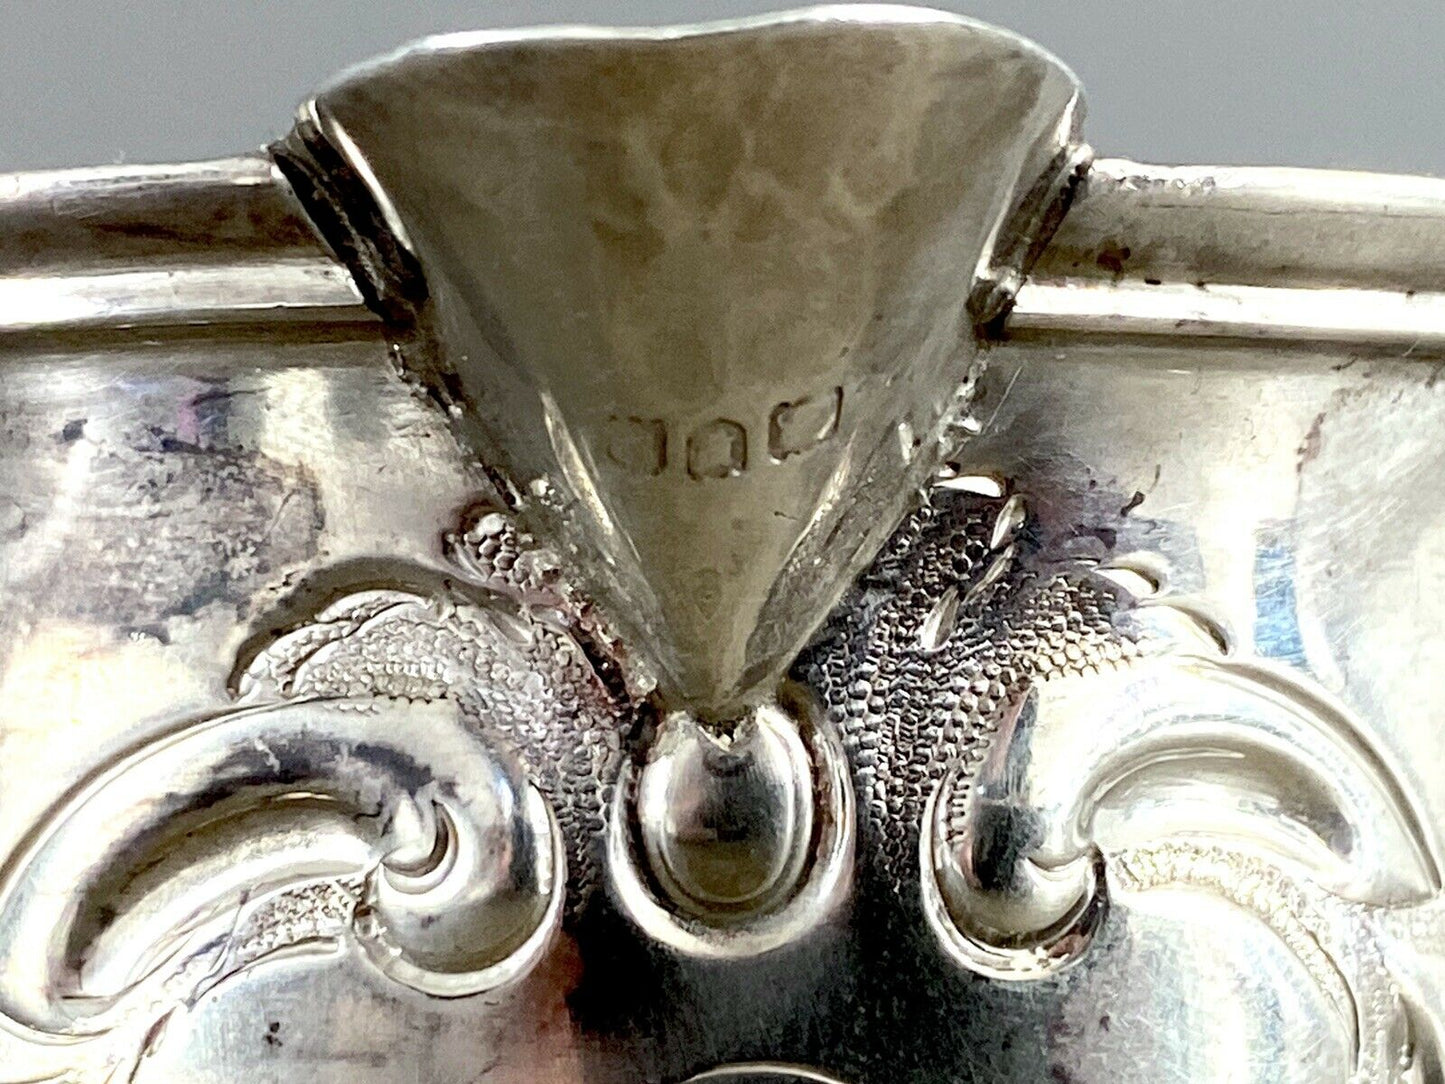 Adpated Silver Cream Jug By H J Lias & Son, London 1861